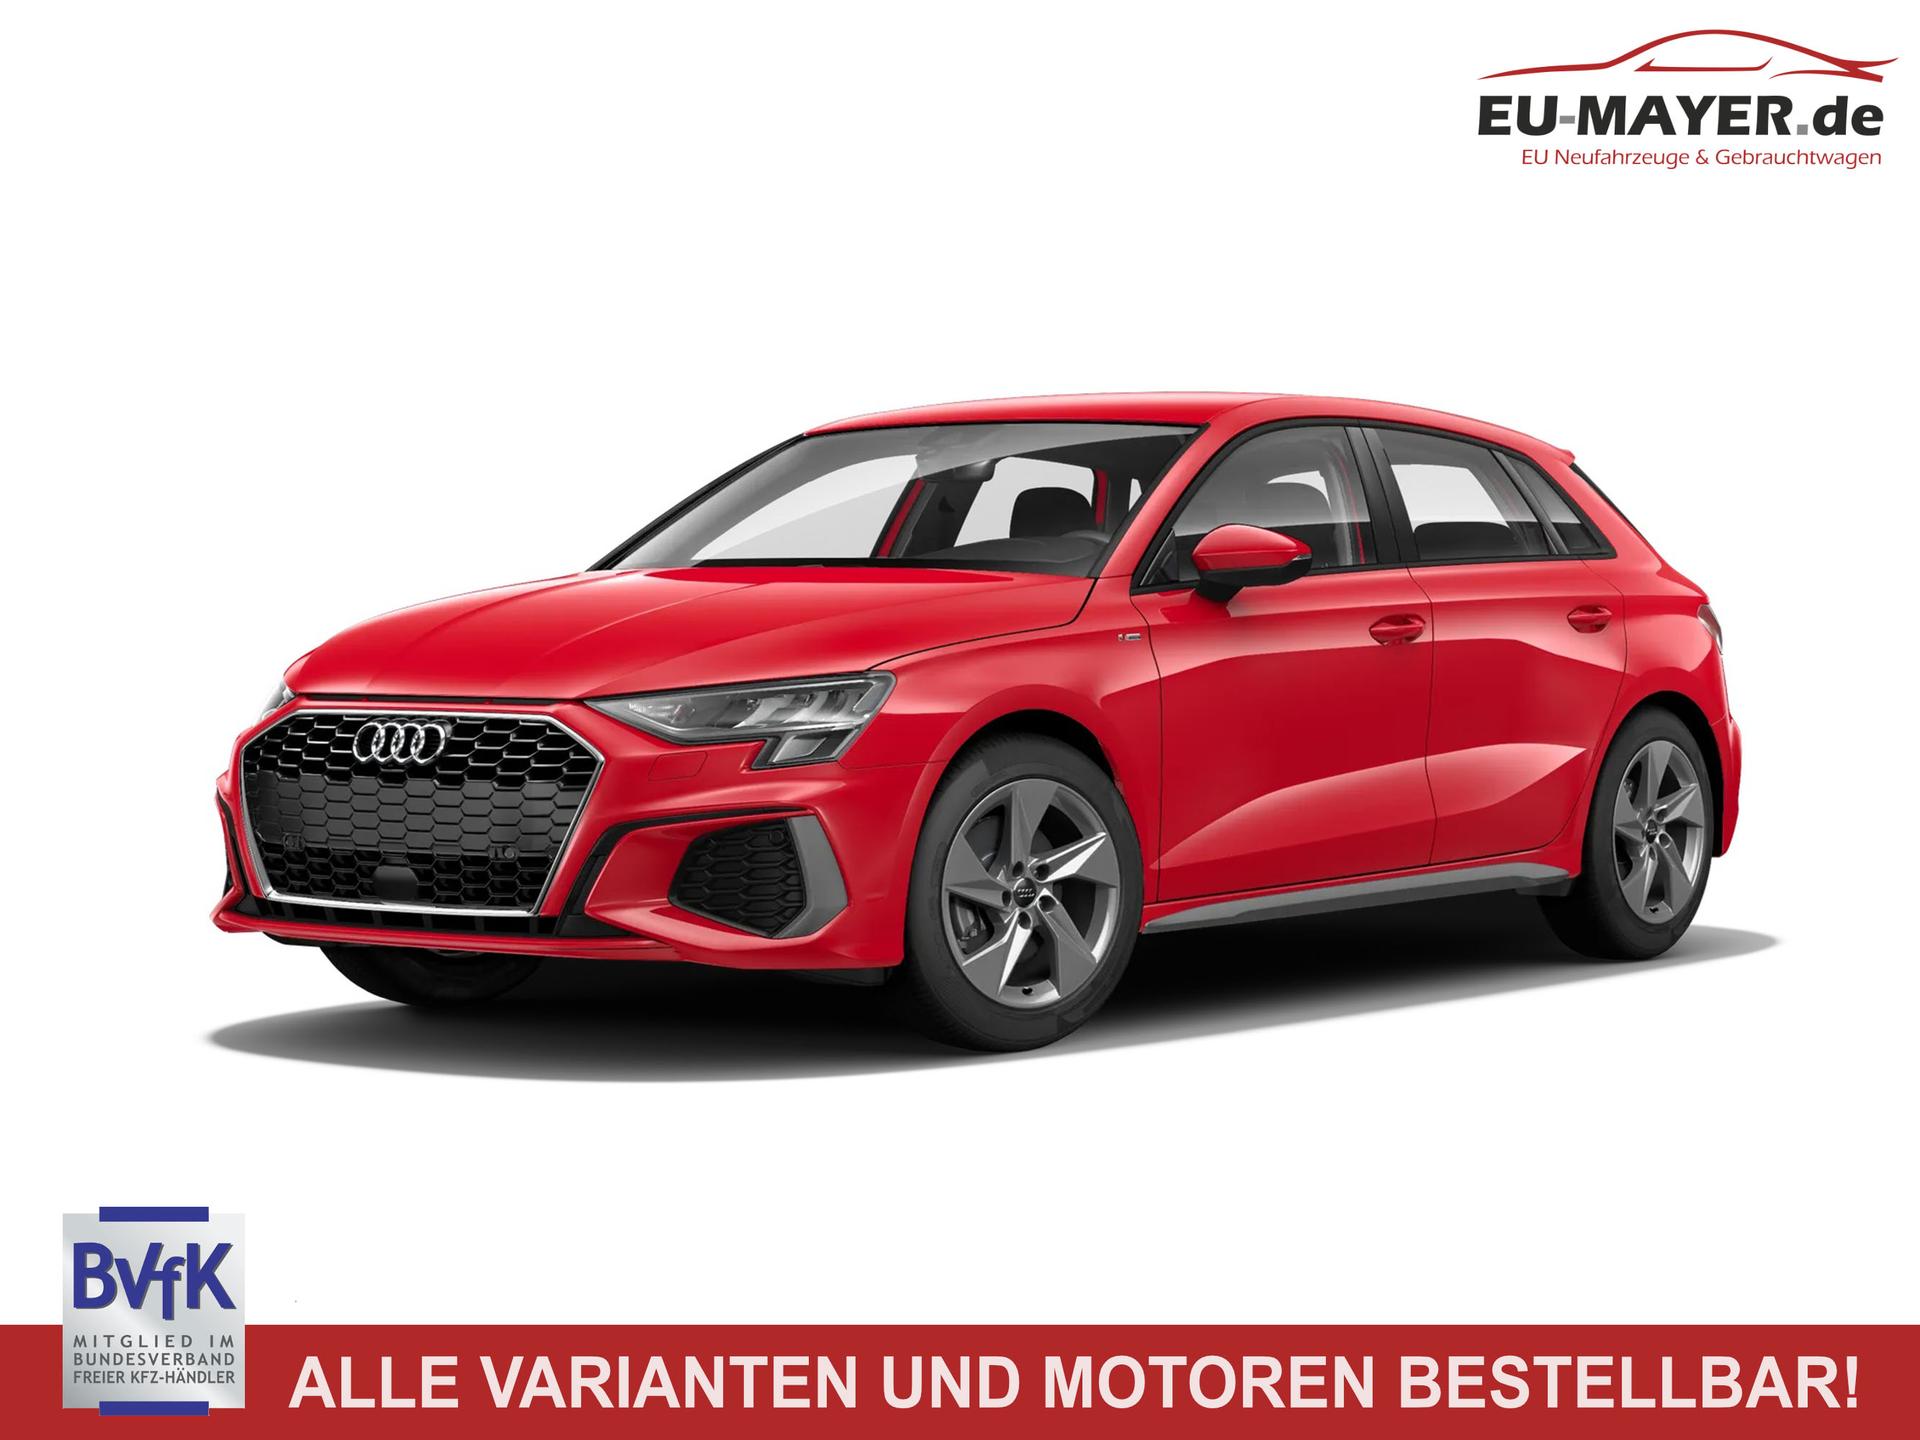 Audi A3 Sportback Basis CZ, EU-Neuwagen & Reimporte, Autohaus Kleinfeld, EU Fahrzeuge